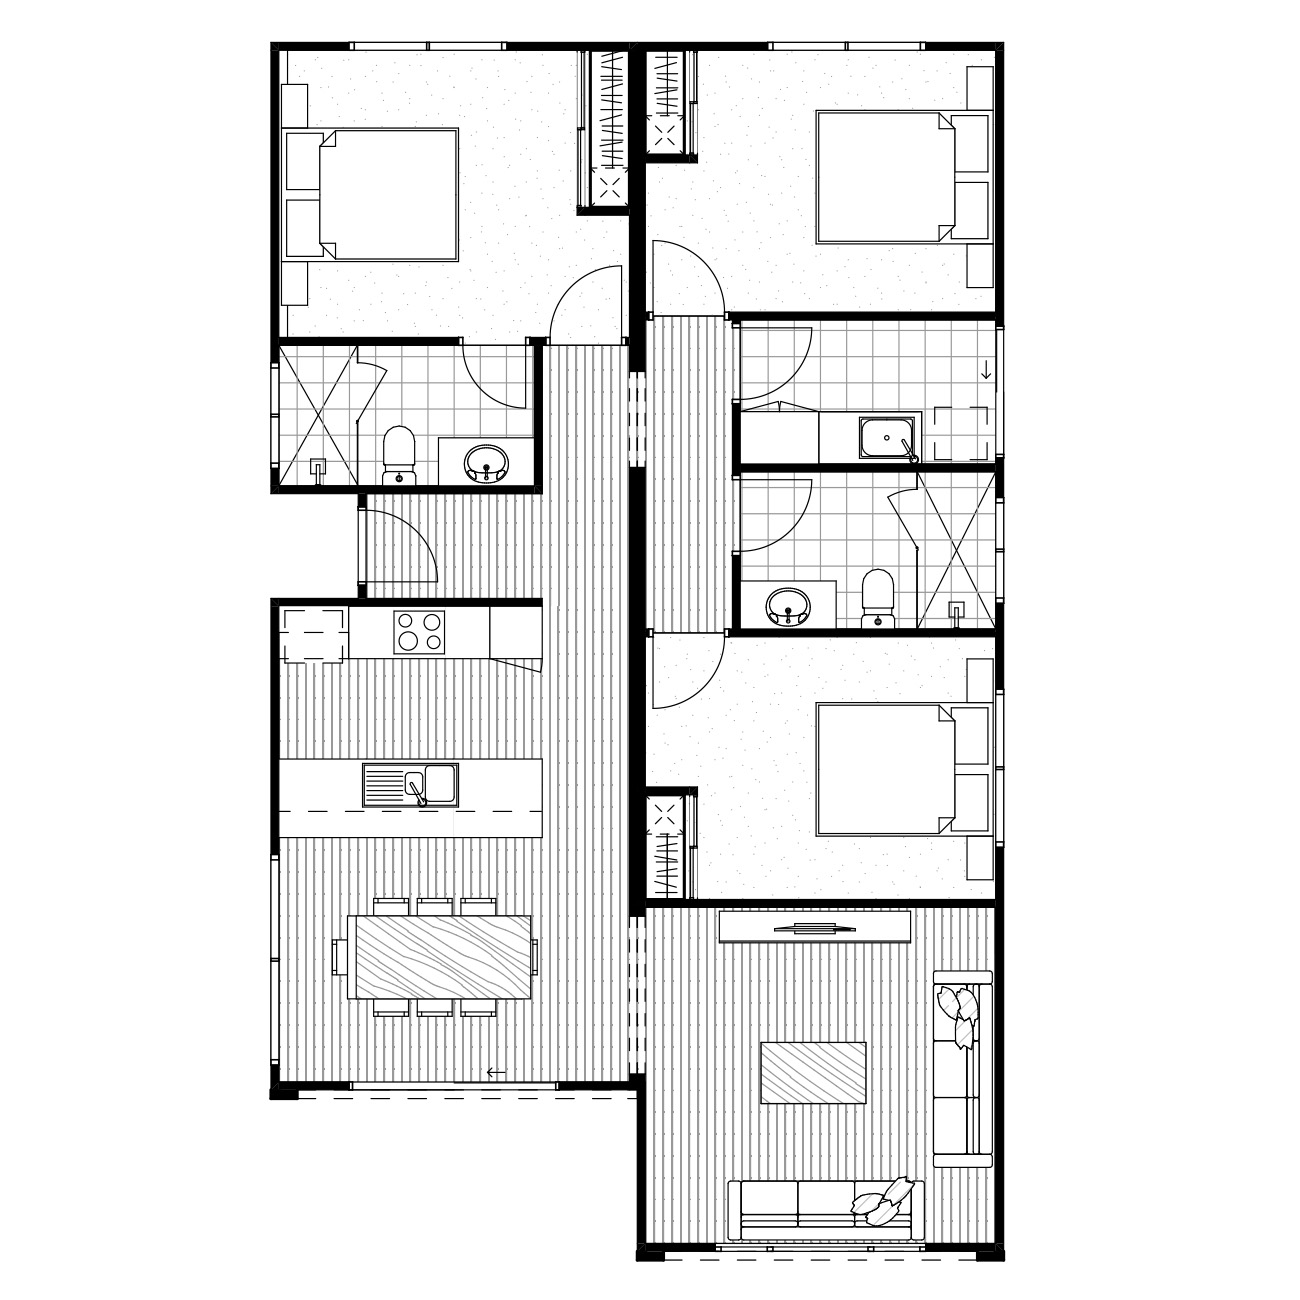 3 bedroom floor plan designed for the Kakadu modular home by Fox Modular